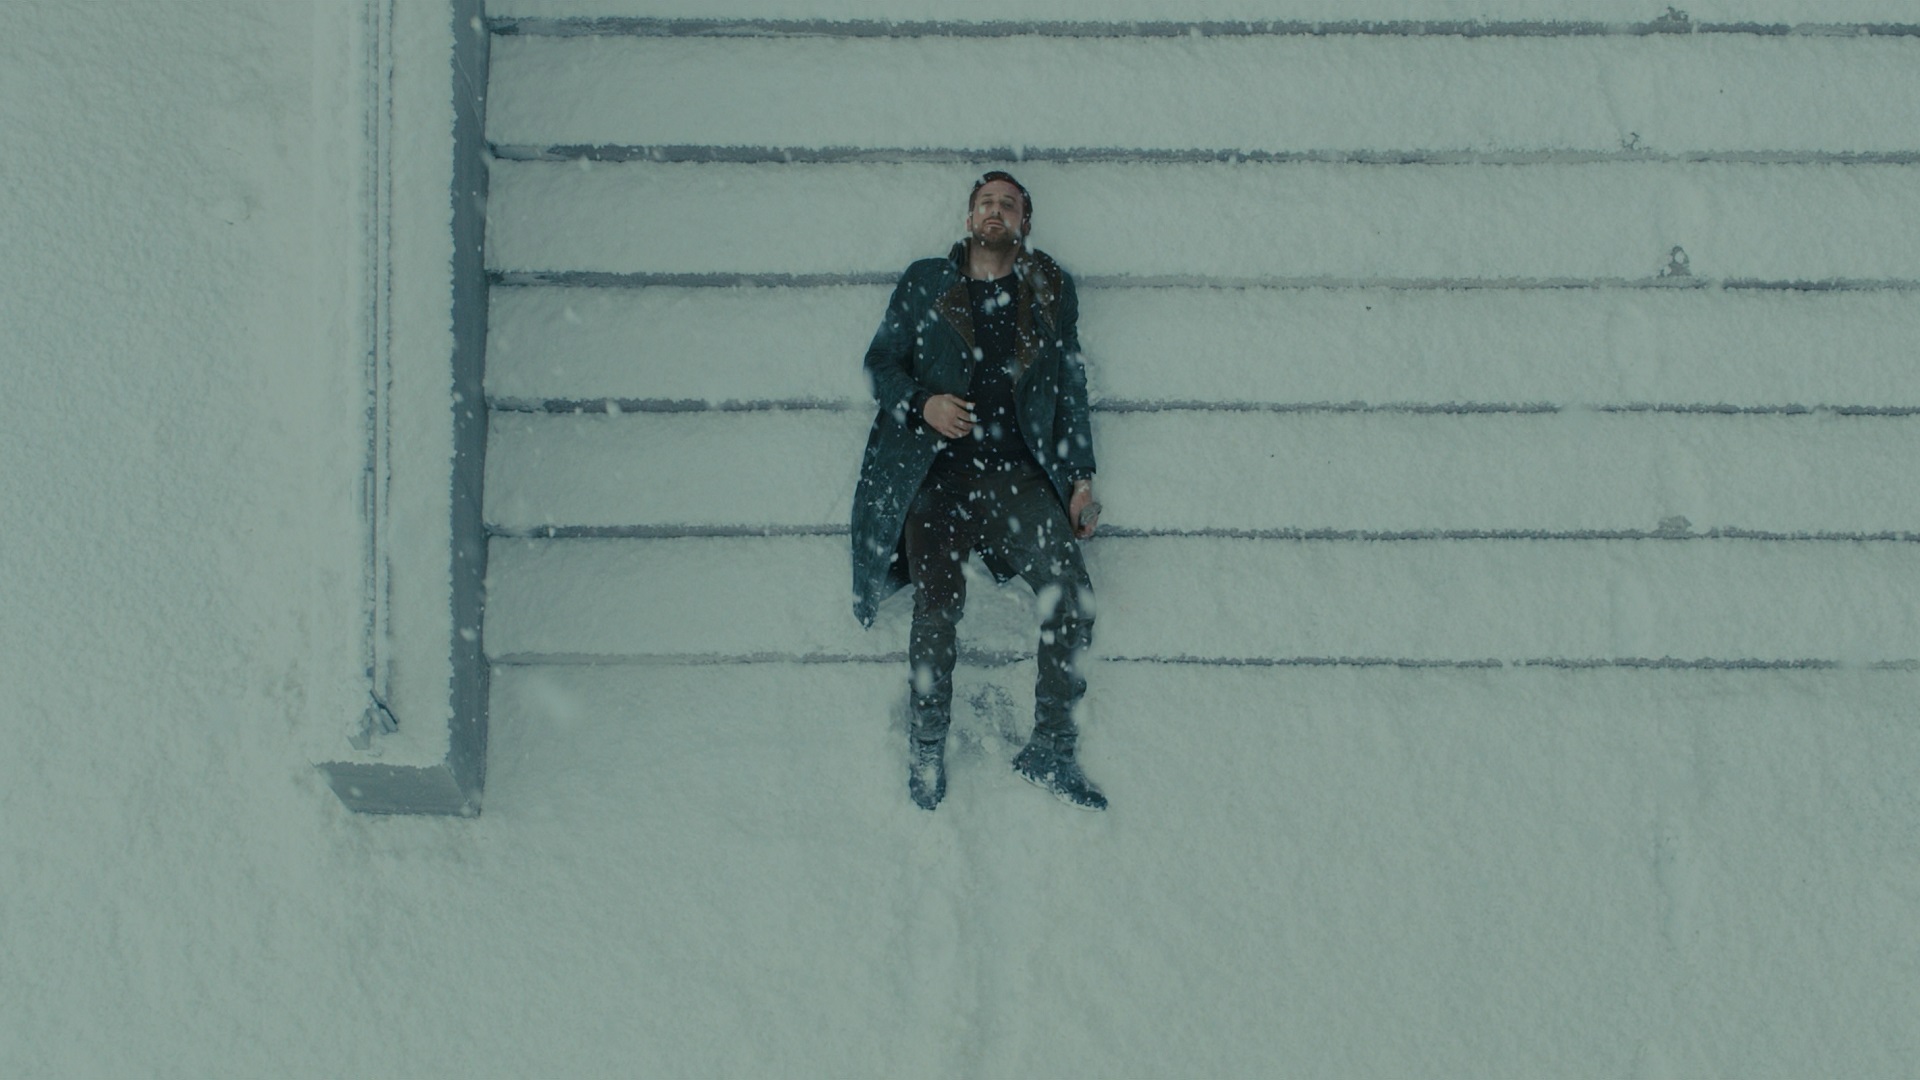 Blade-Runner-blade-runner-2049-snow-winter-stairs-movies-men-actor-Ryan-Gosling-lying-down-1247729.jpg